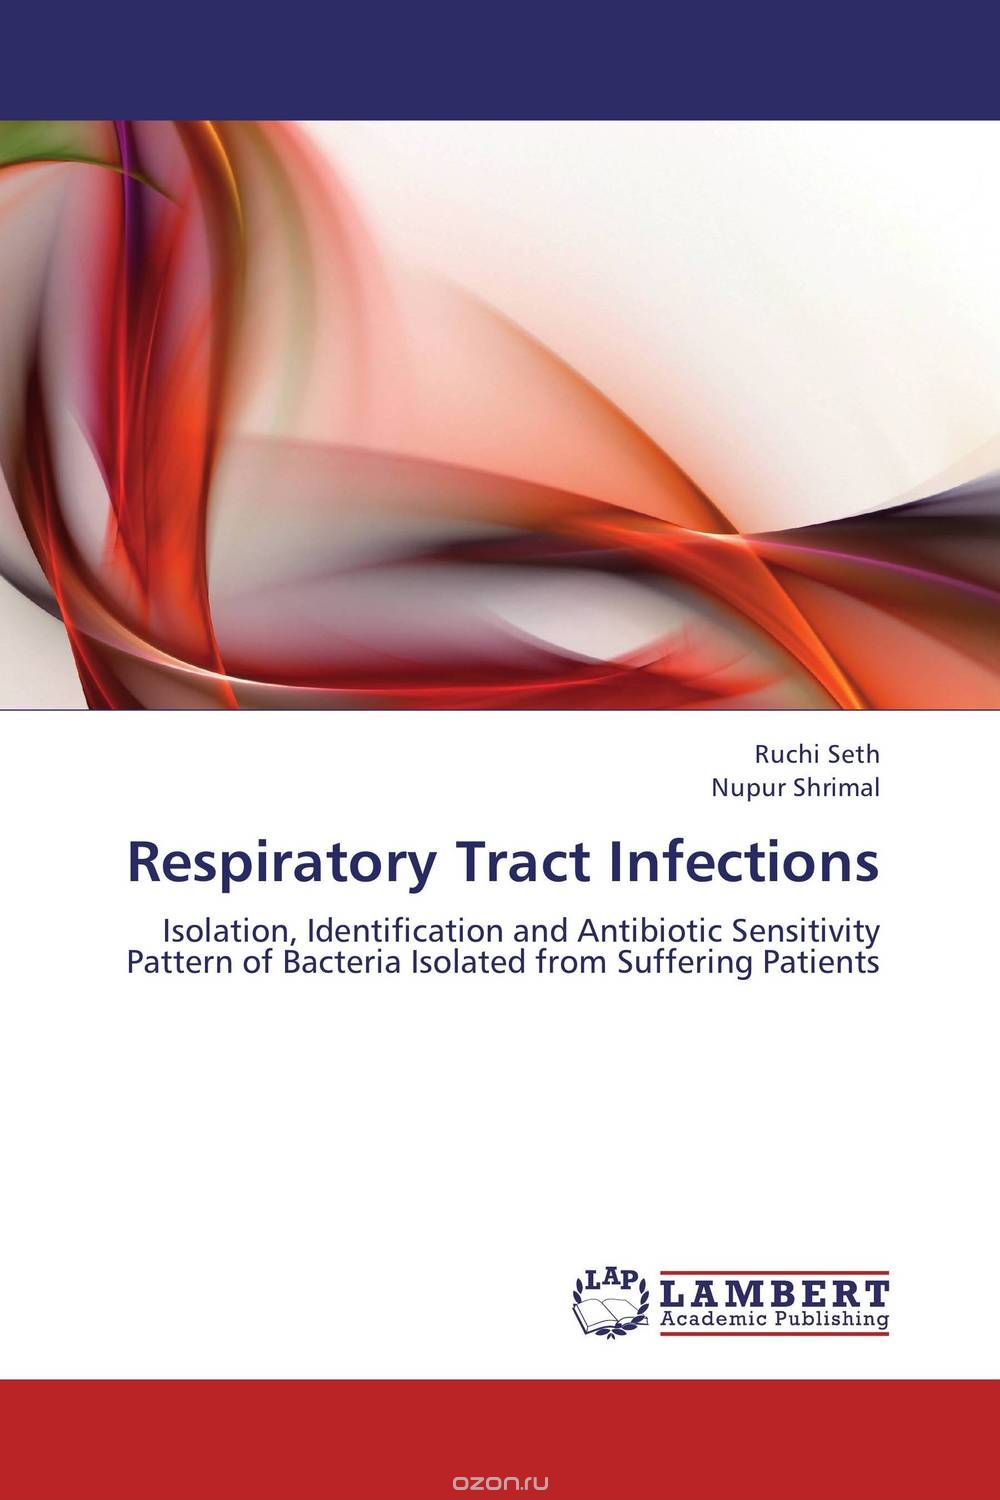 Скачать книгу "Respiratory Tract Infections"